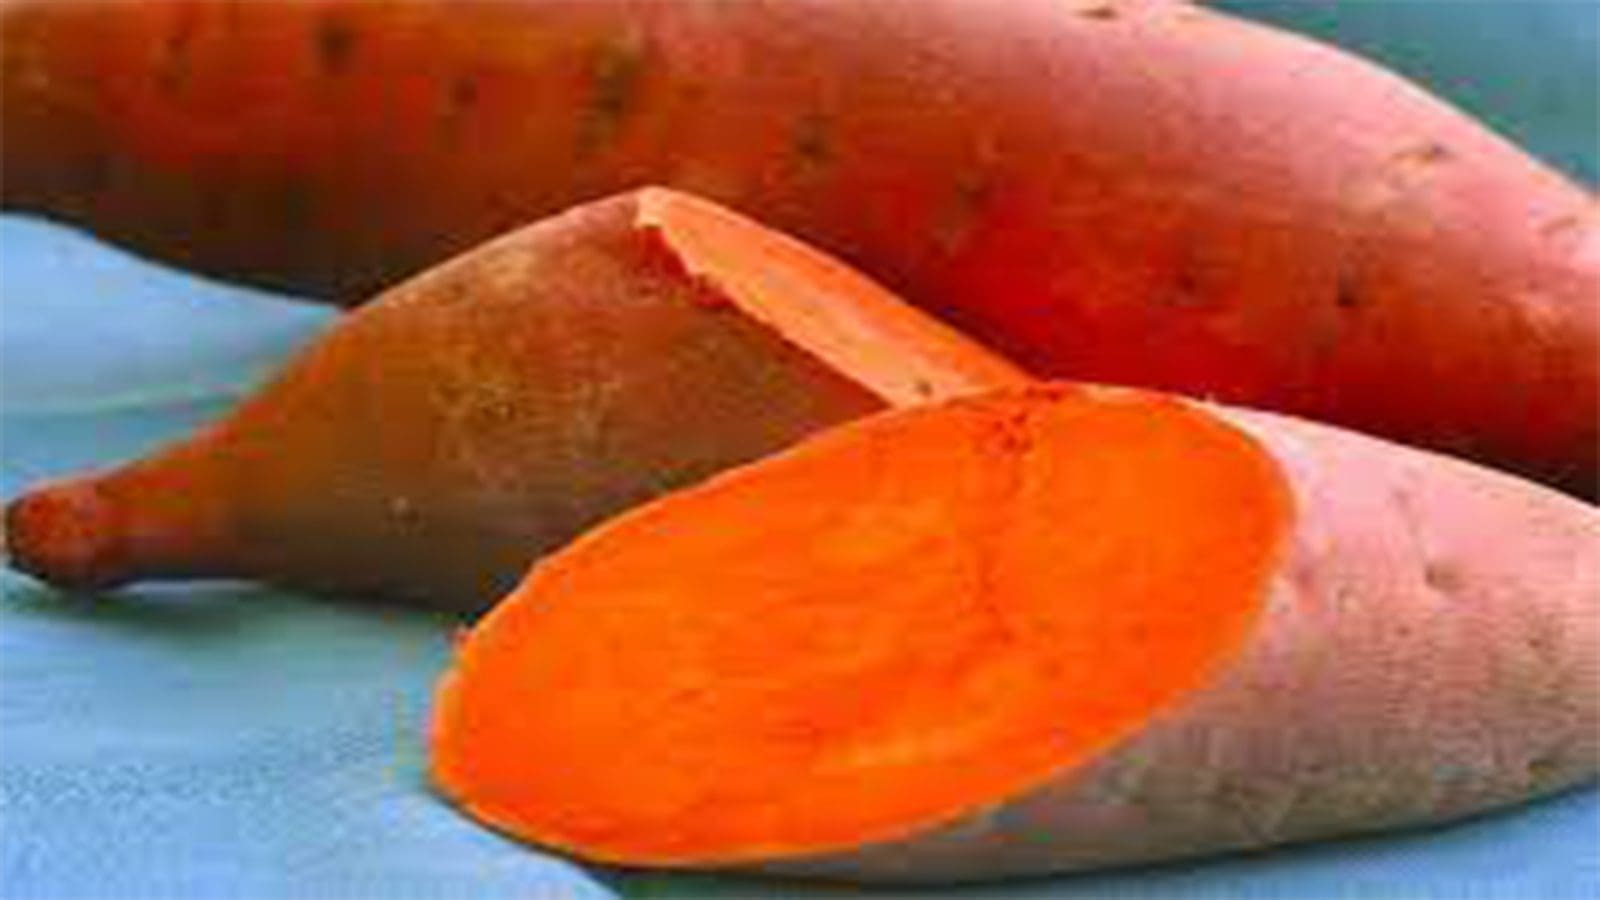 IFAD aids Eswatini in orange fleshed sweet potato evaluation to boost food security